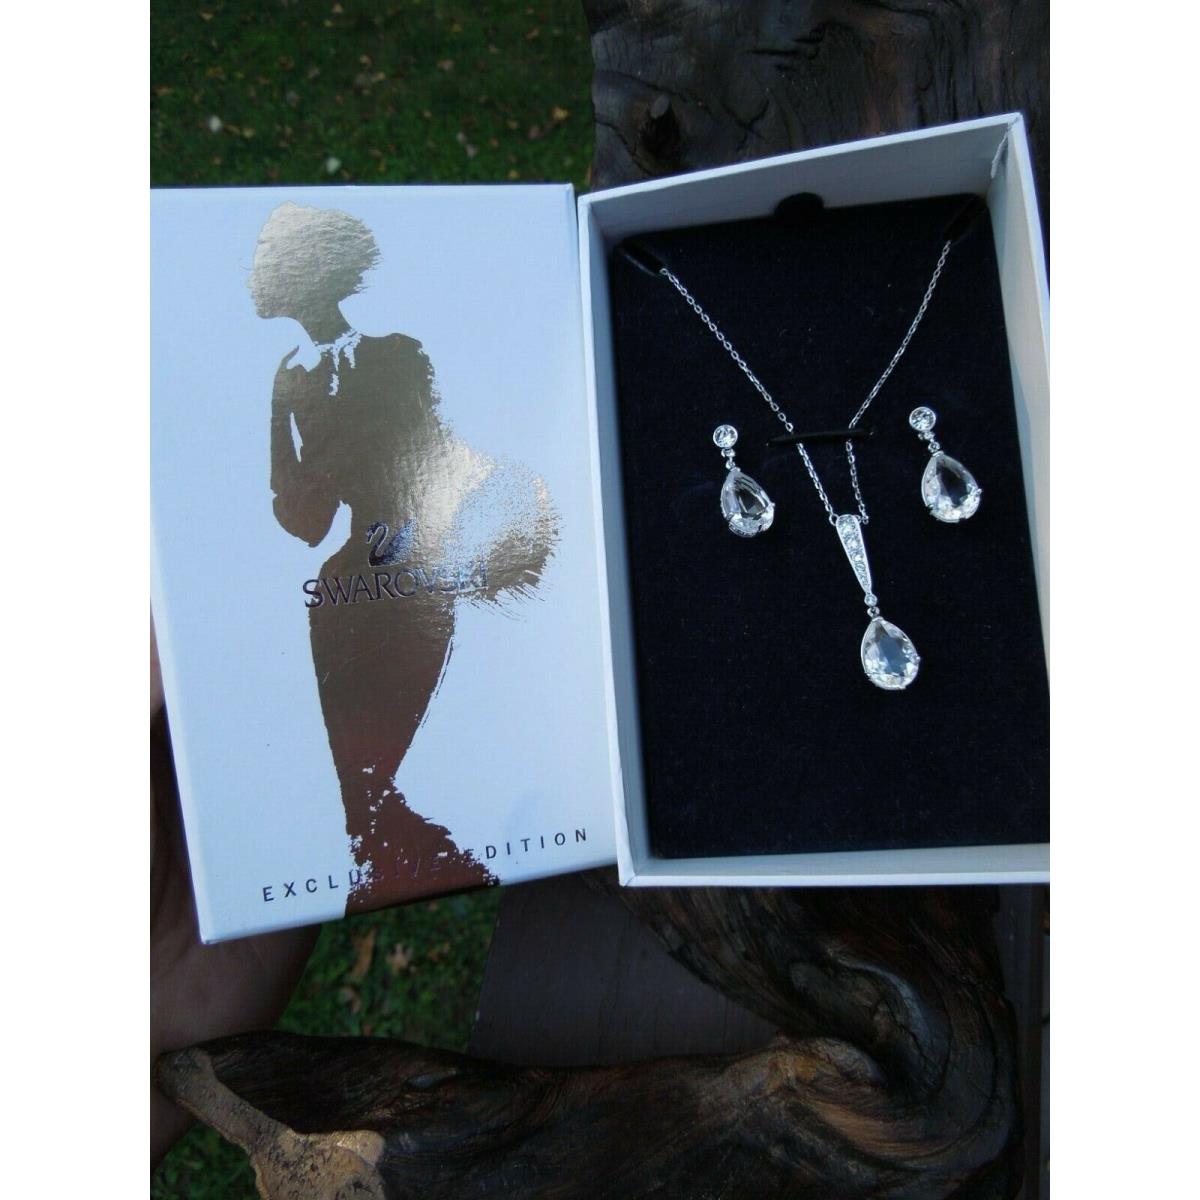 Atelier Swarovski Rhodium Plated Vtg Crystal Necklace Earrings Set 5030008